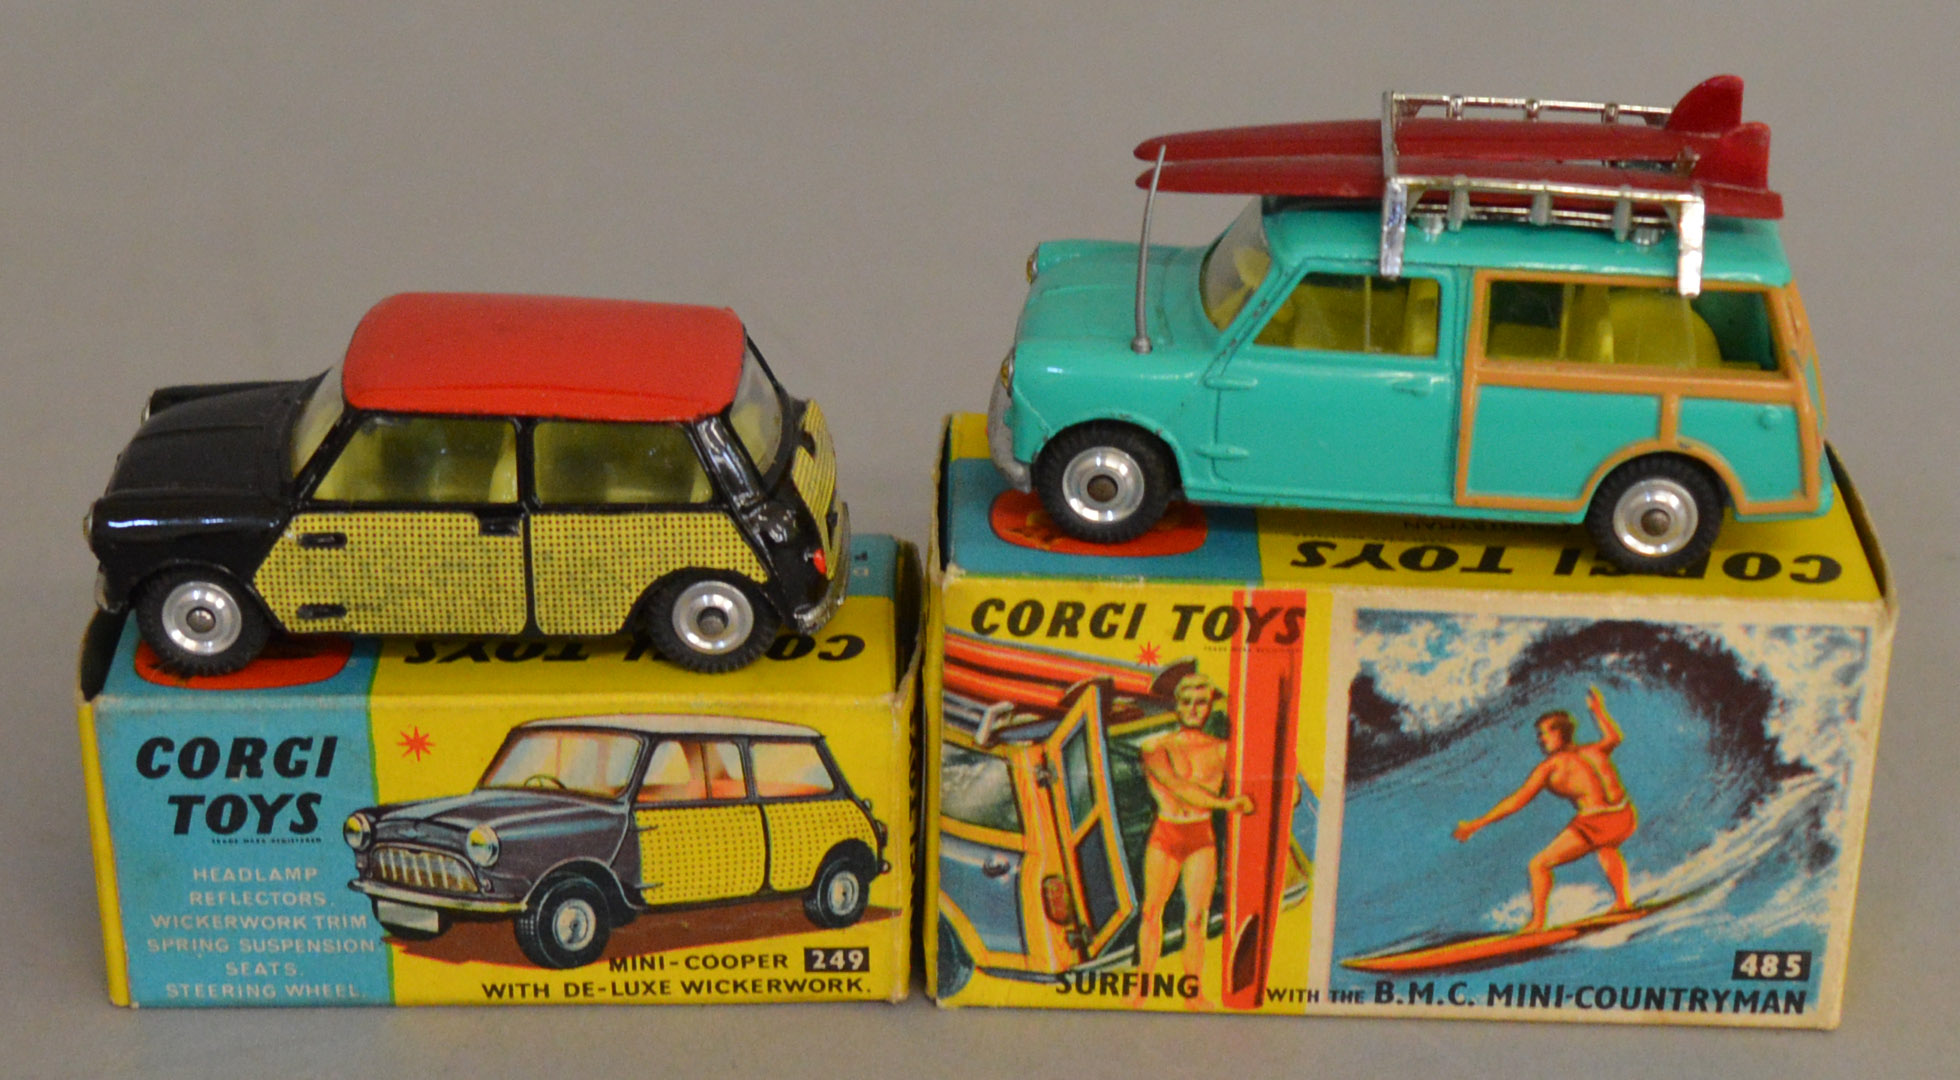 2 Corgi Toys, 249 Mini-Cooper with De-Luxe Wickerwork and  485 Surfing with the BMC Mini Countryman,